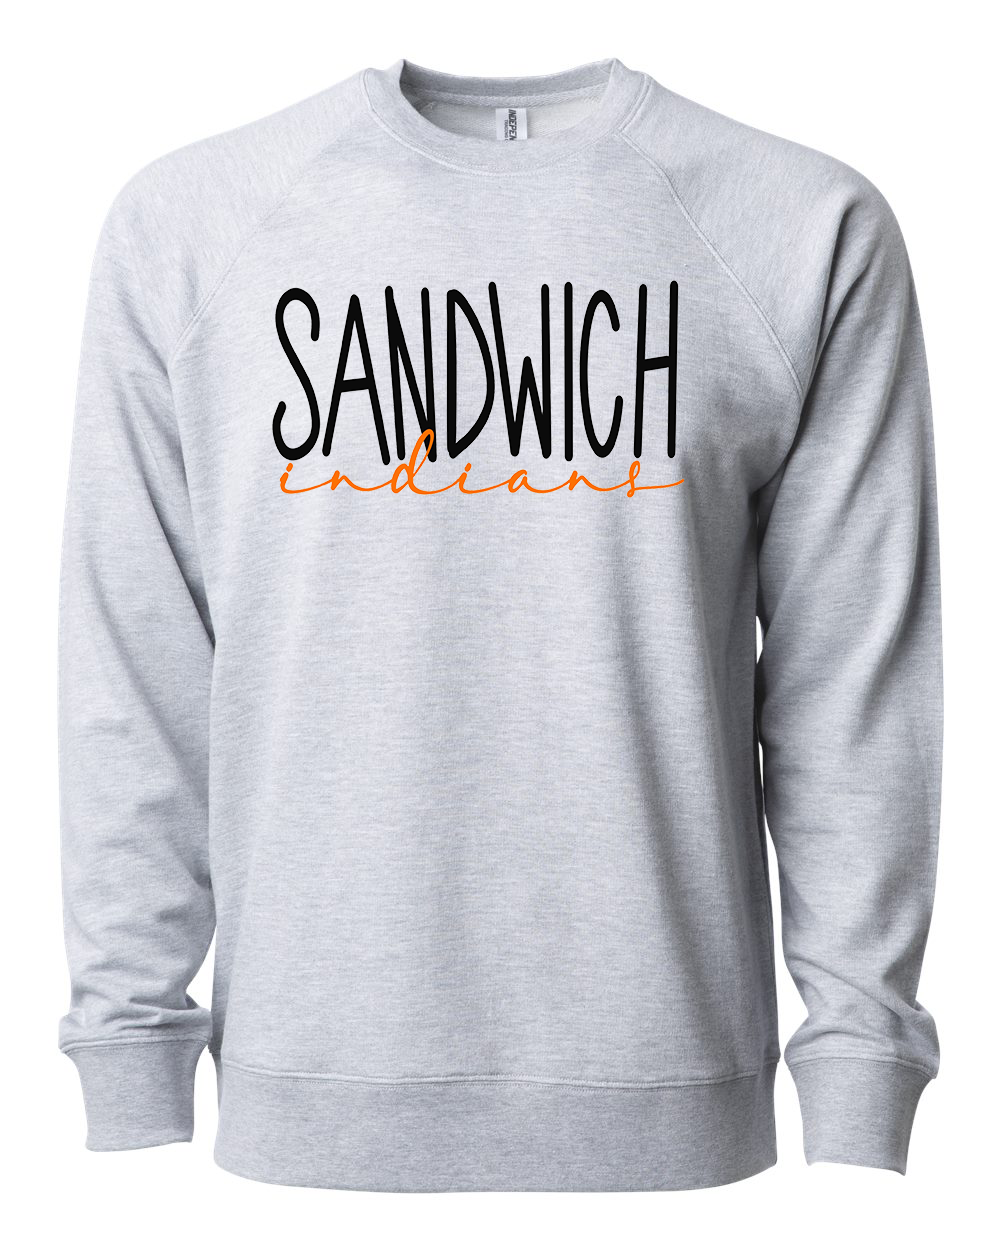 Unisex Lightweight Crewneck Sandwich/Somonauk/HBR Sweatshirt